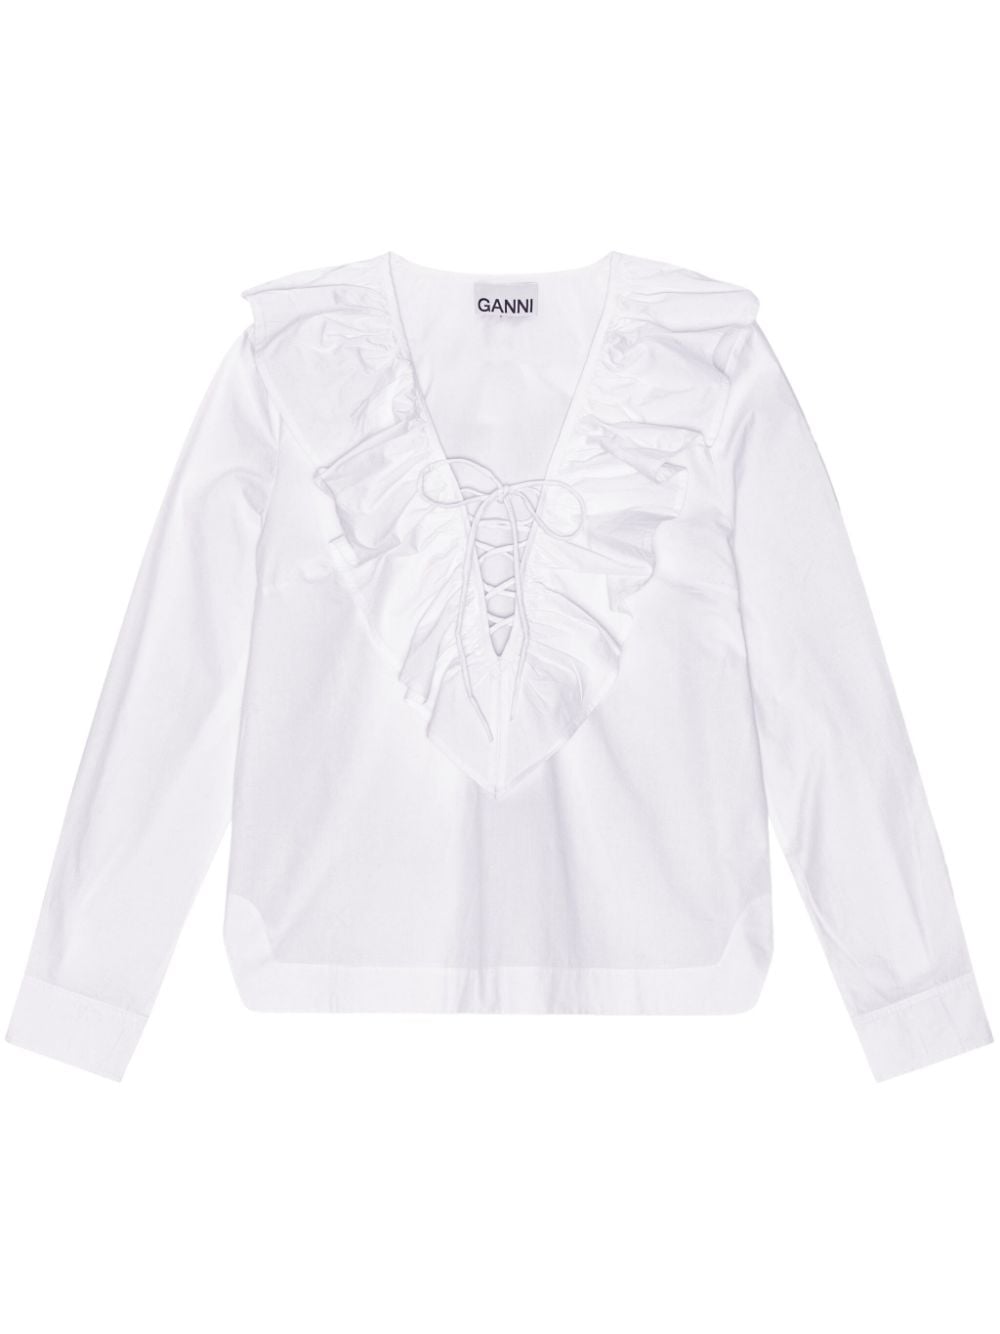 Ruffle collar white blouse